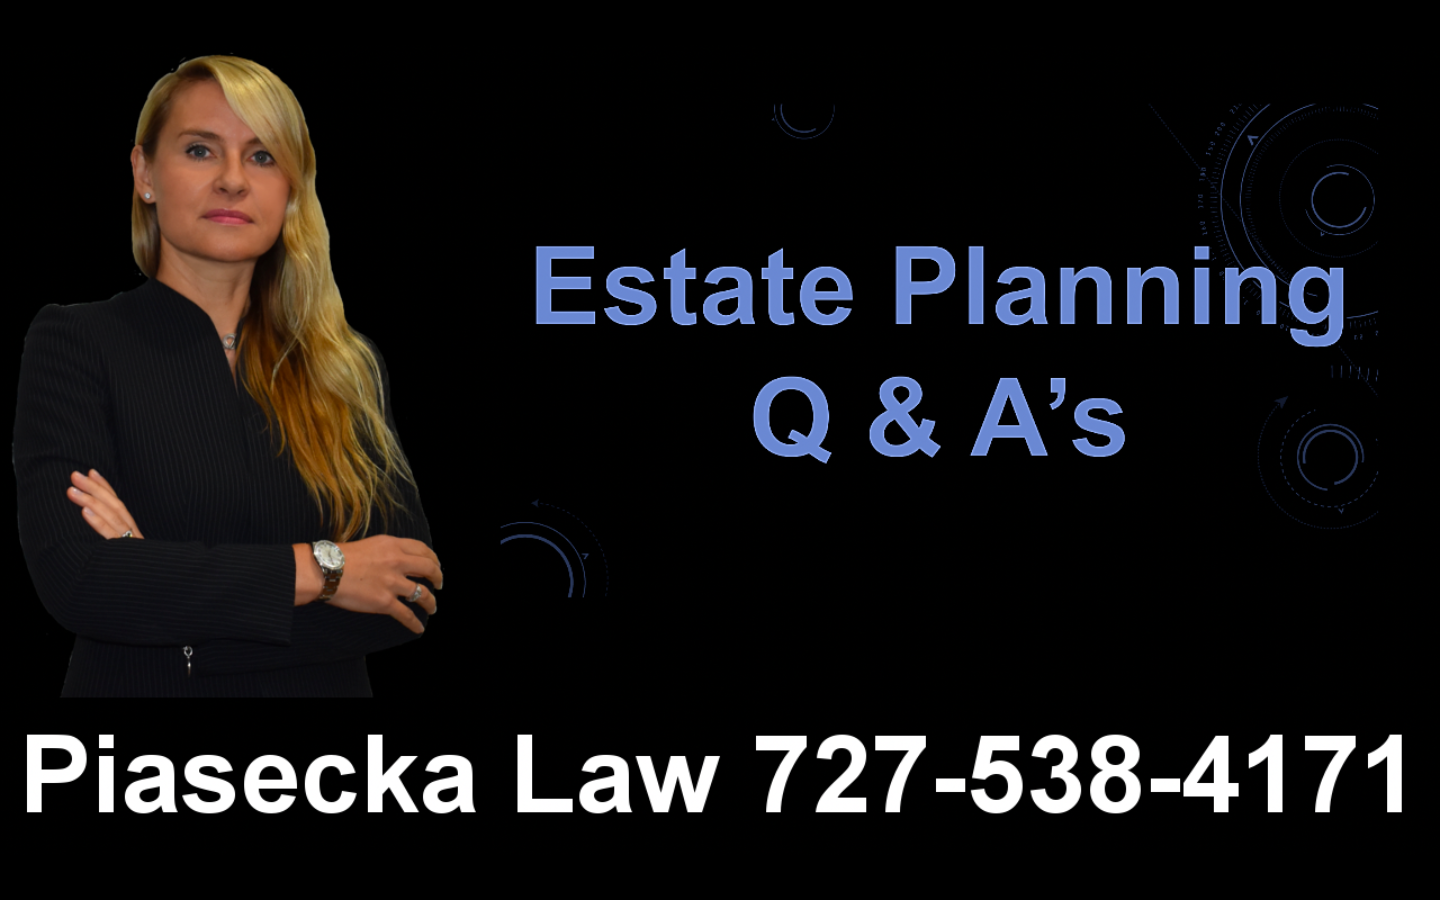 Estate Planning Q & A’s, Clearwater, Florida, Lawyer, Attorney, Agnieszka, Aga, Piasecka